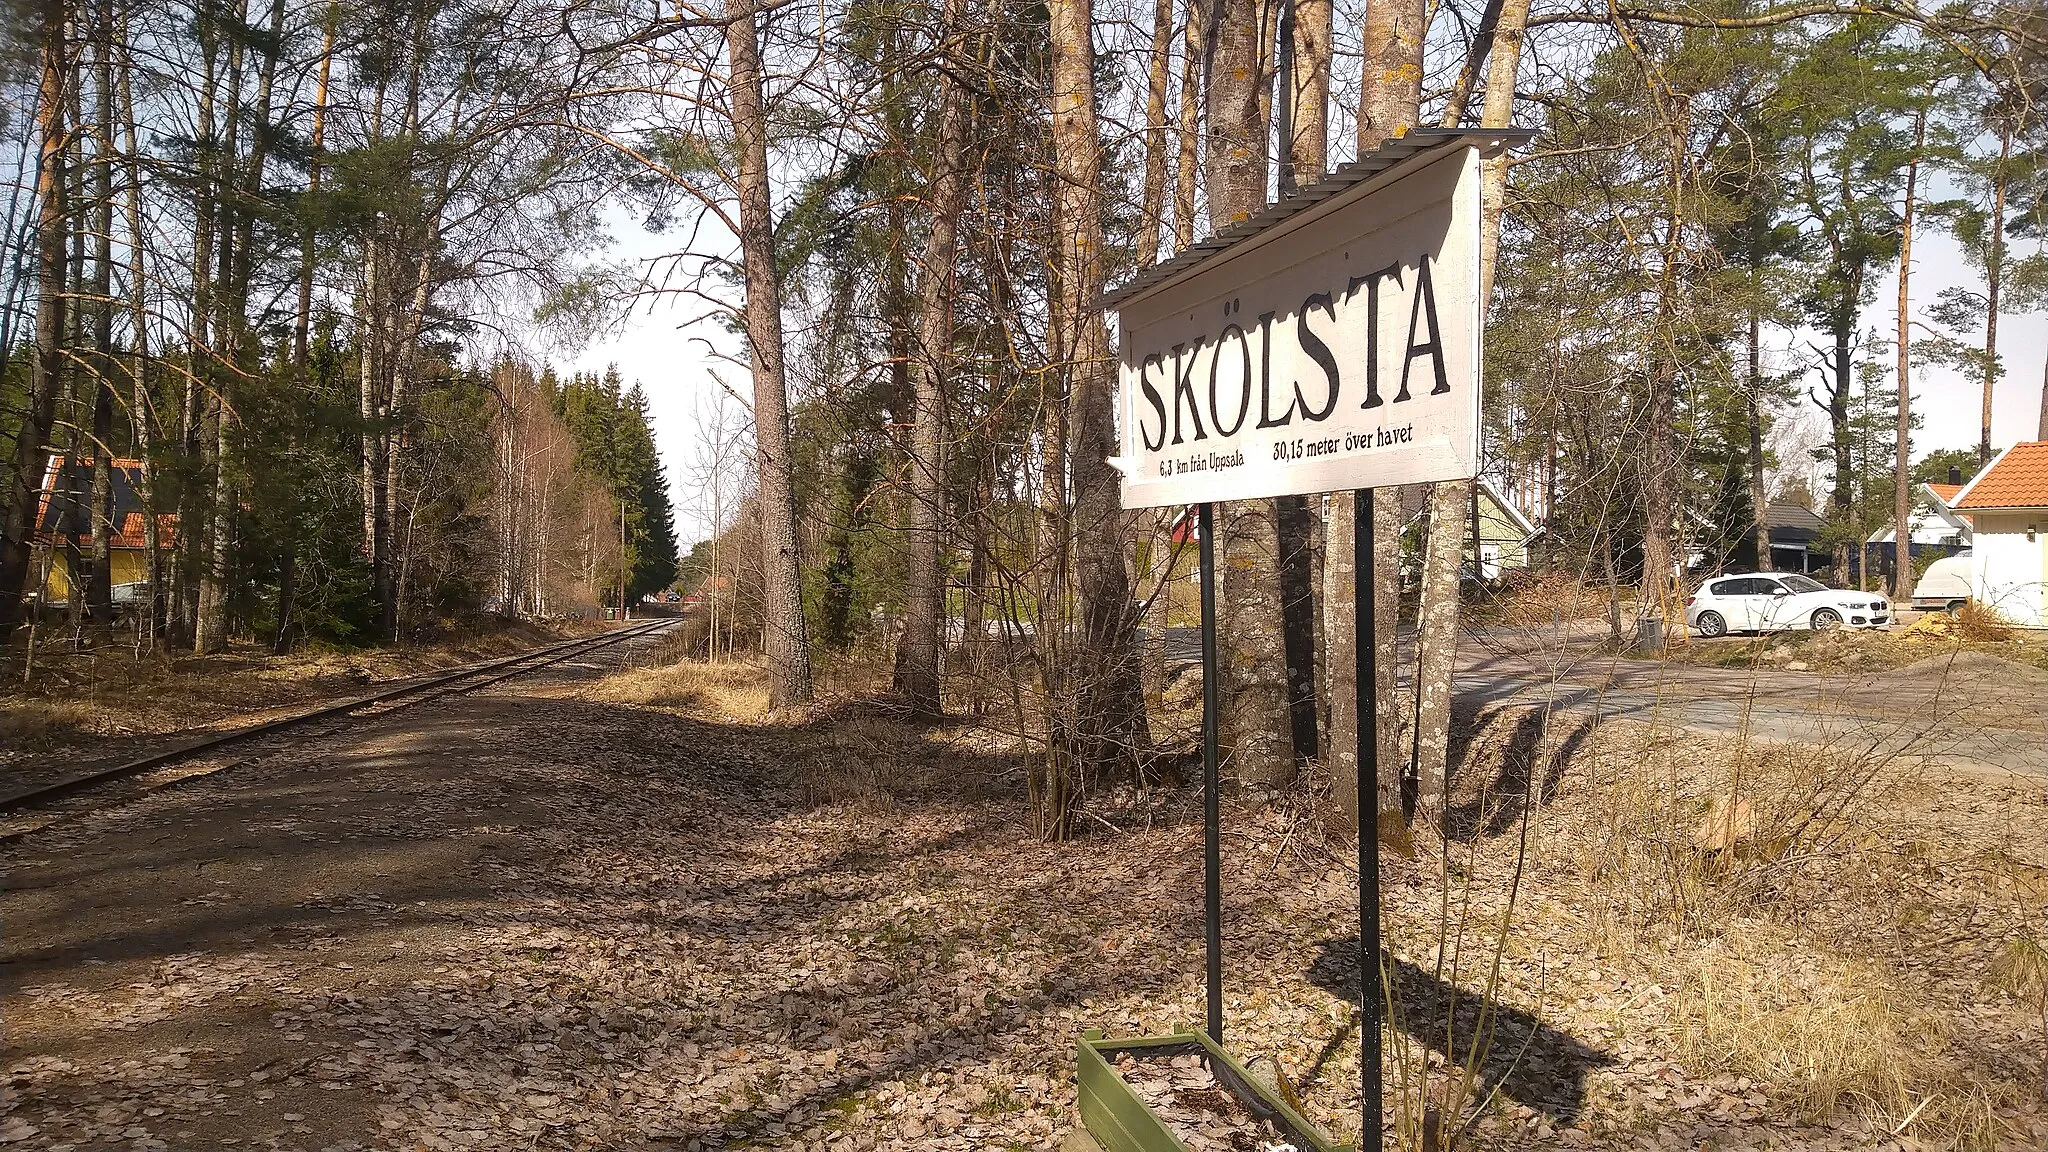 Photo showing: The Lennakatten heritage railway's stop in Skölsta, a small Swedish municipality located 6 kilometers east of Uppsala.